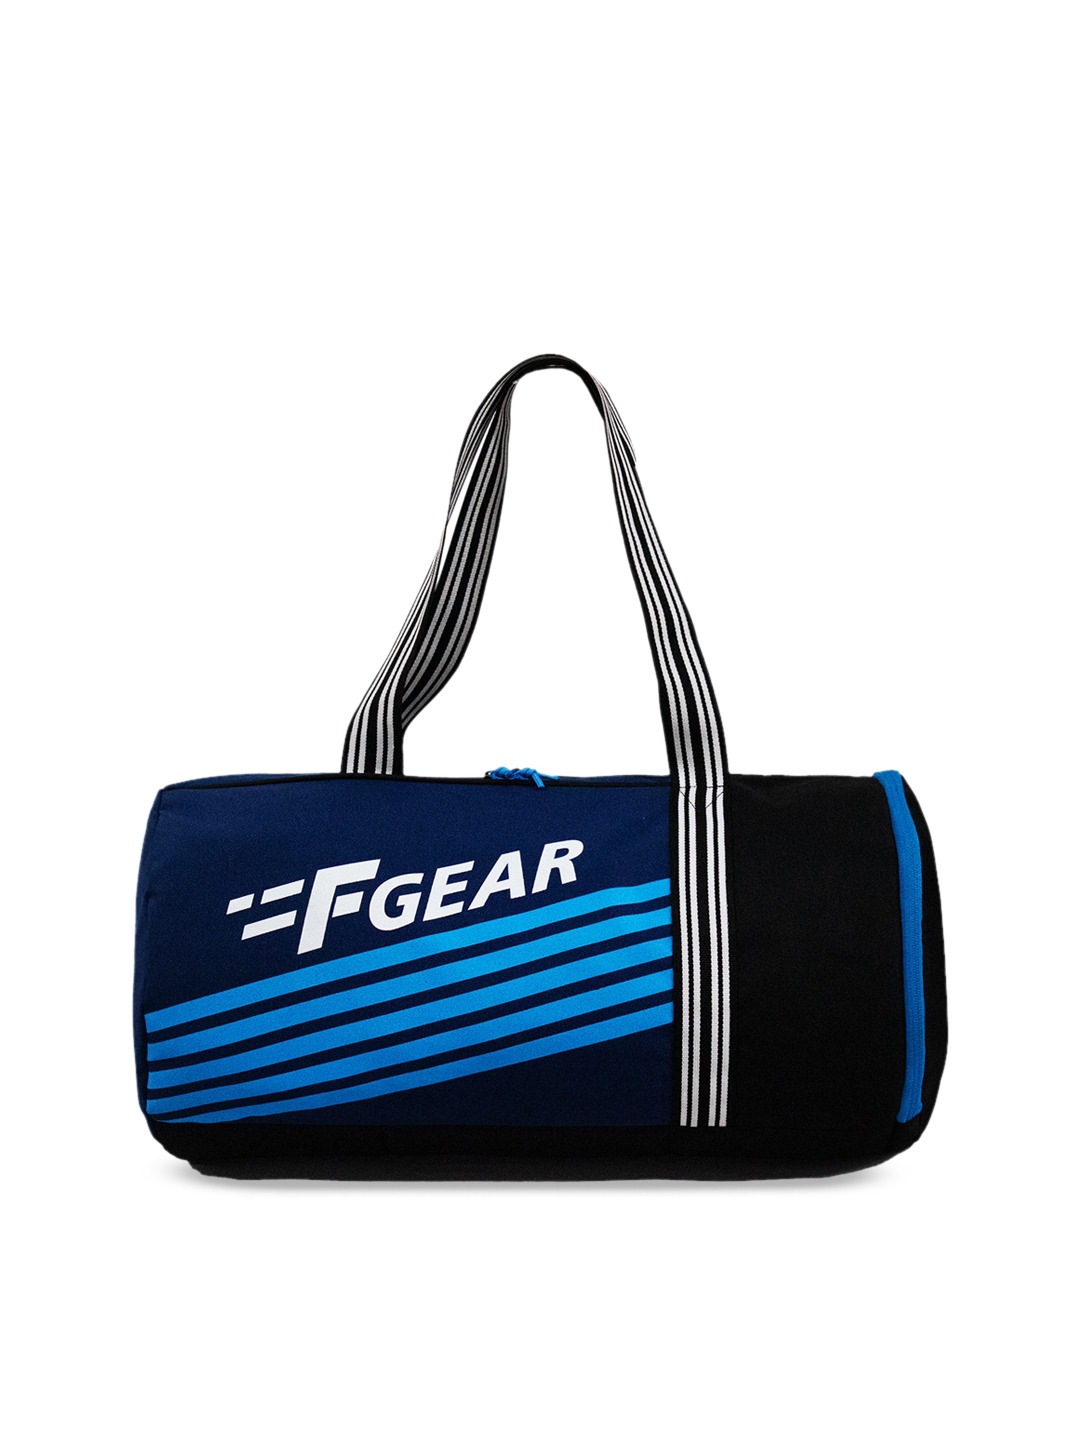 Accessories Duffel Bag | F Gear Navy Blue & White Printed Workout Gym Duffle Bag - CU21242